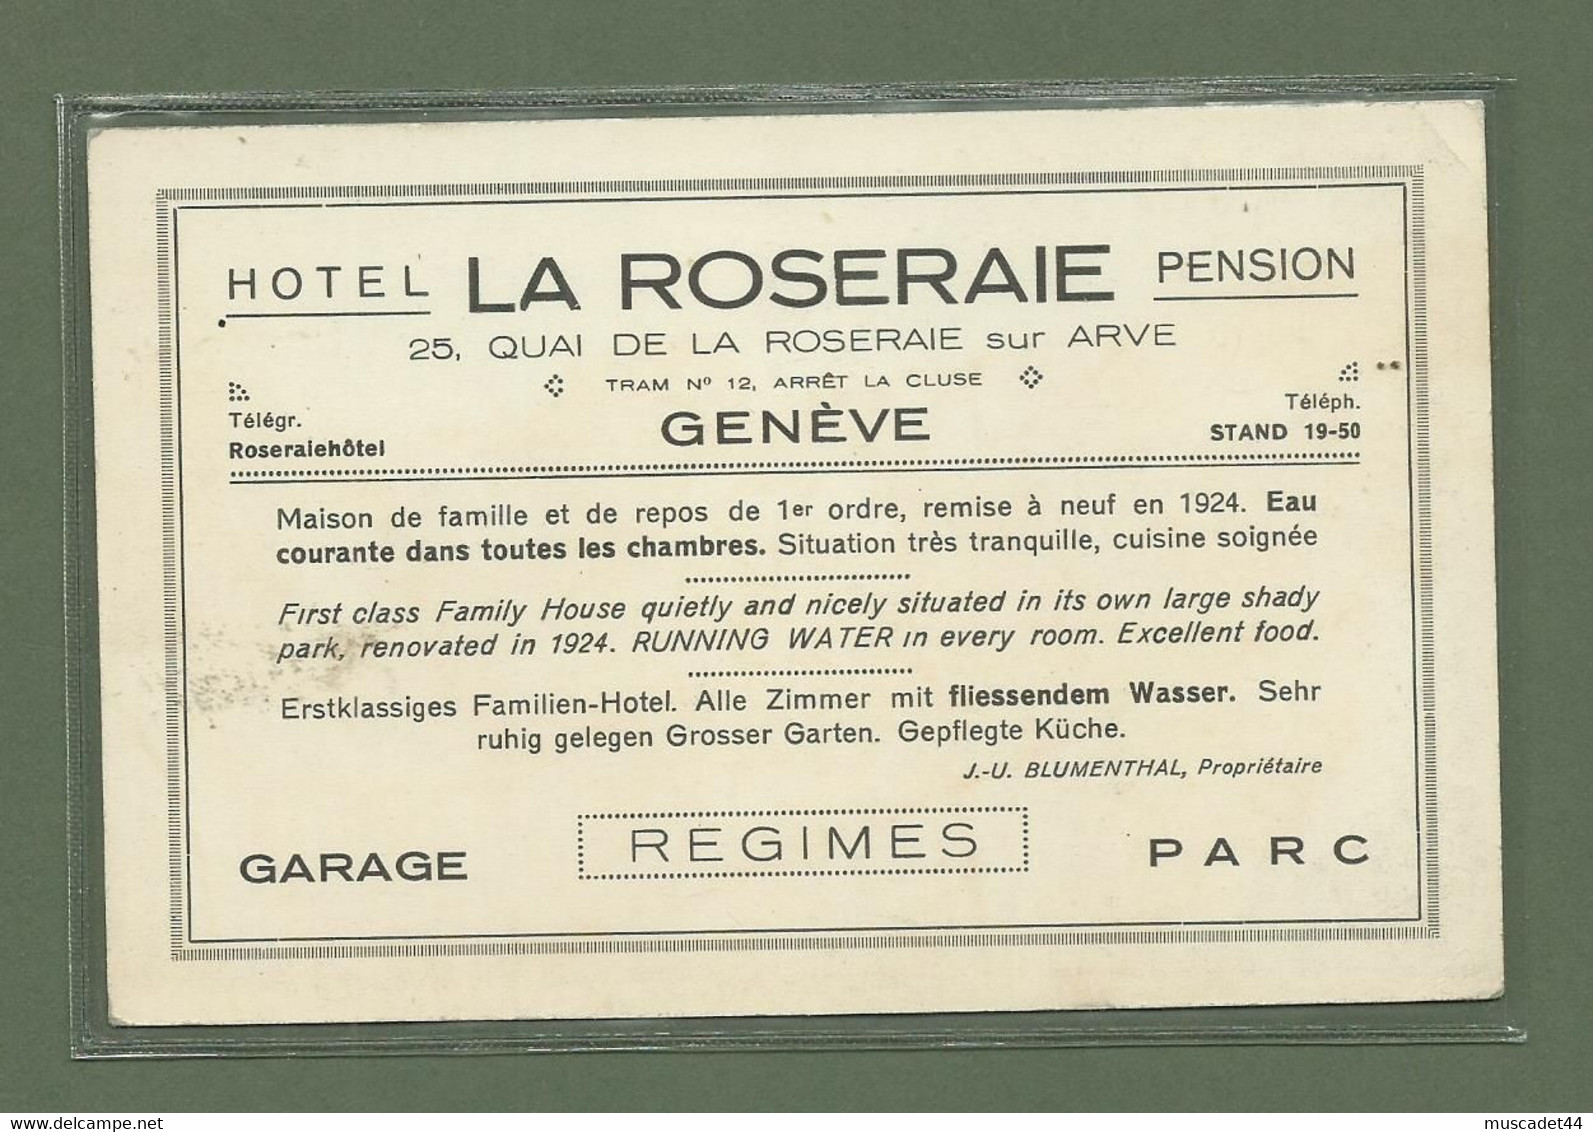 CARTE PUBLICITAIRE HOTEL PENSION LA ROSERAIE GENEVE SUISSE - Visiting Cards